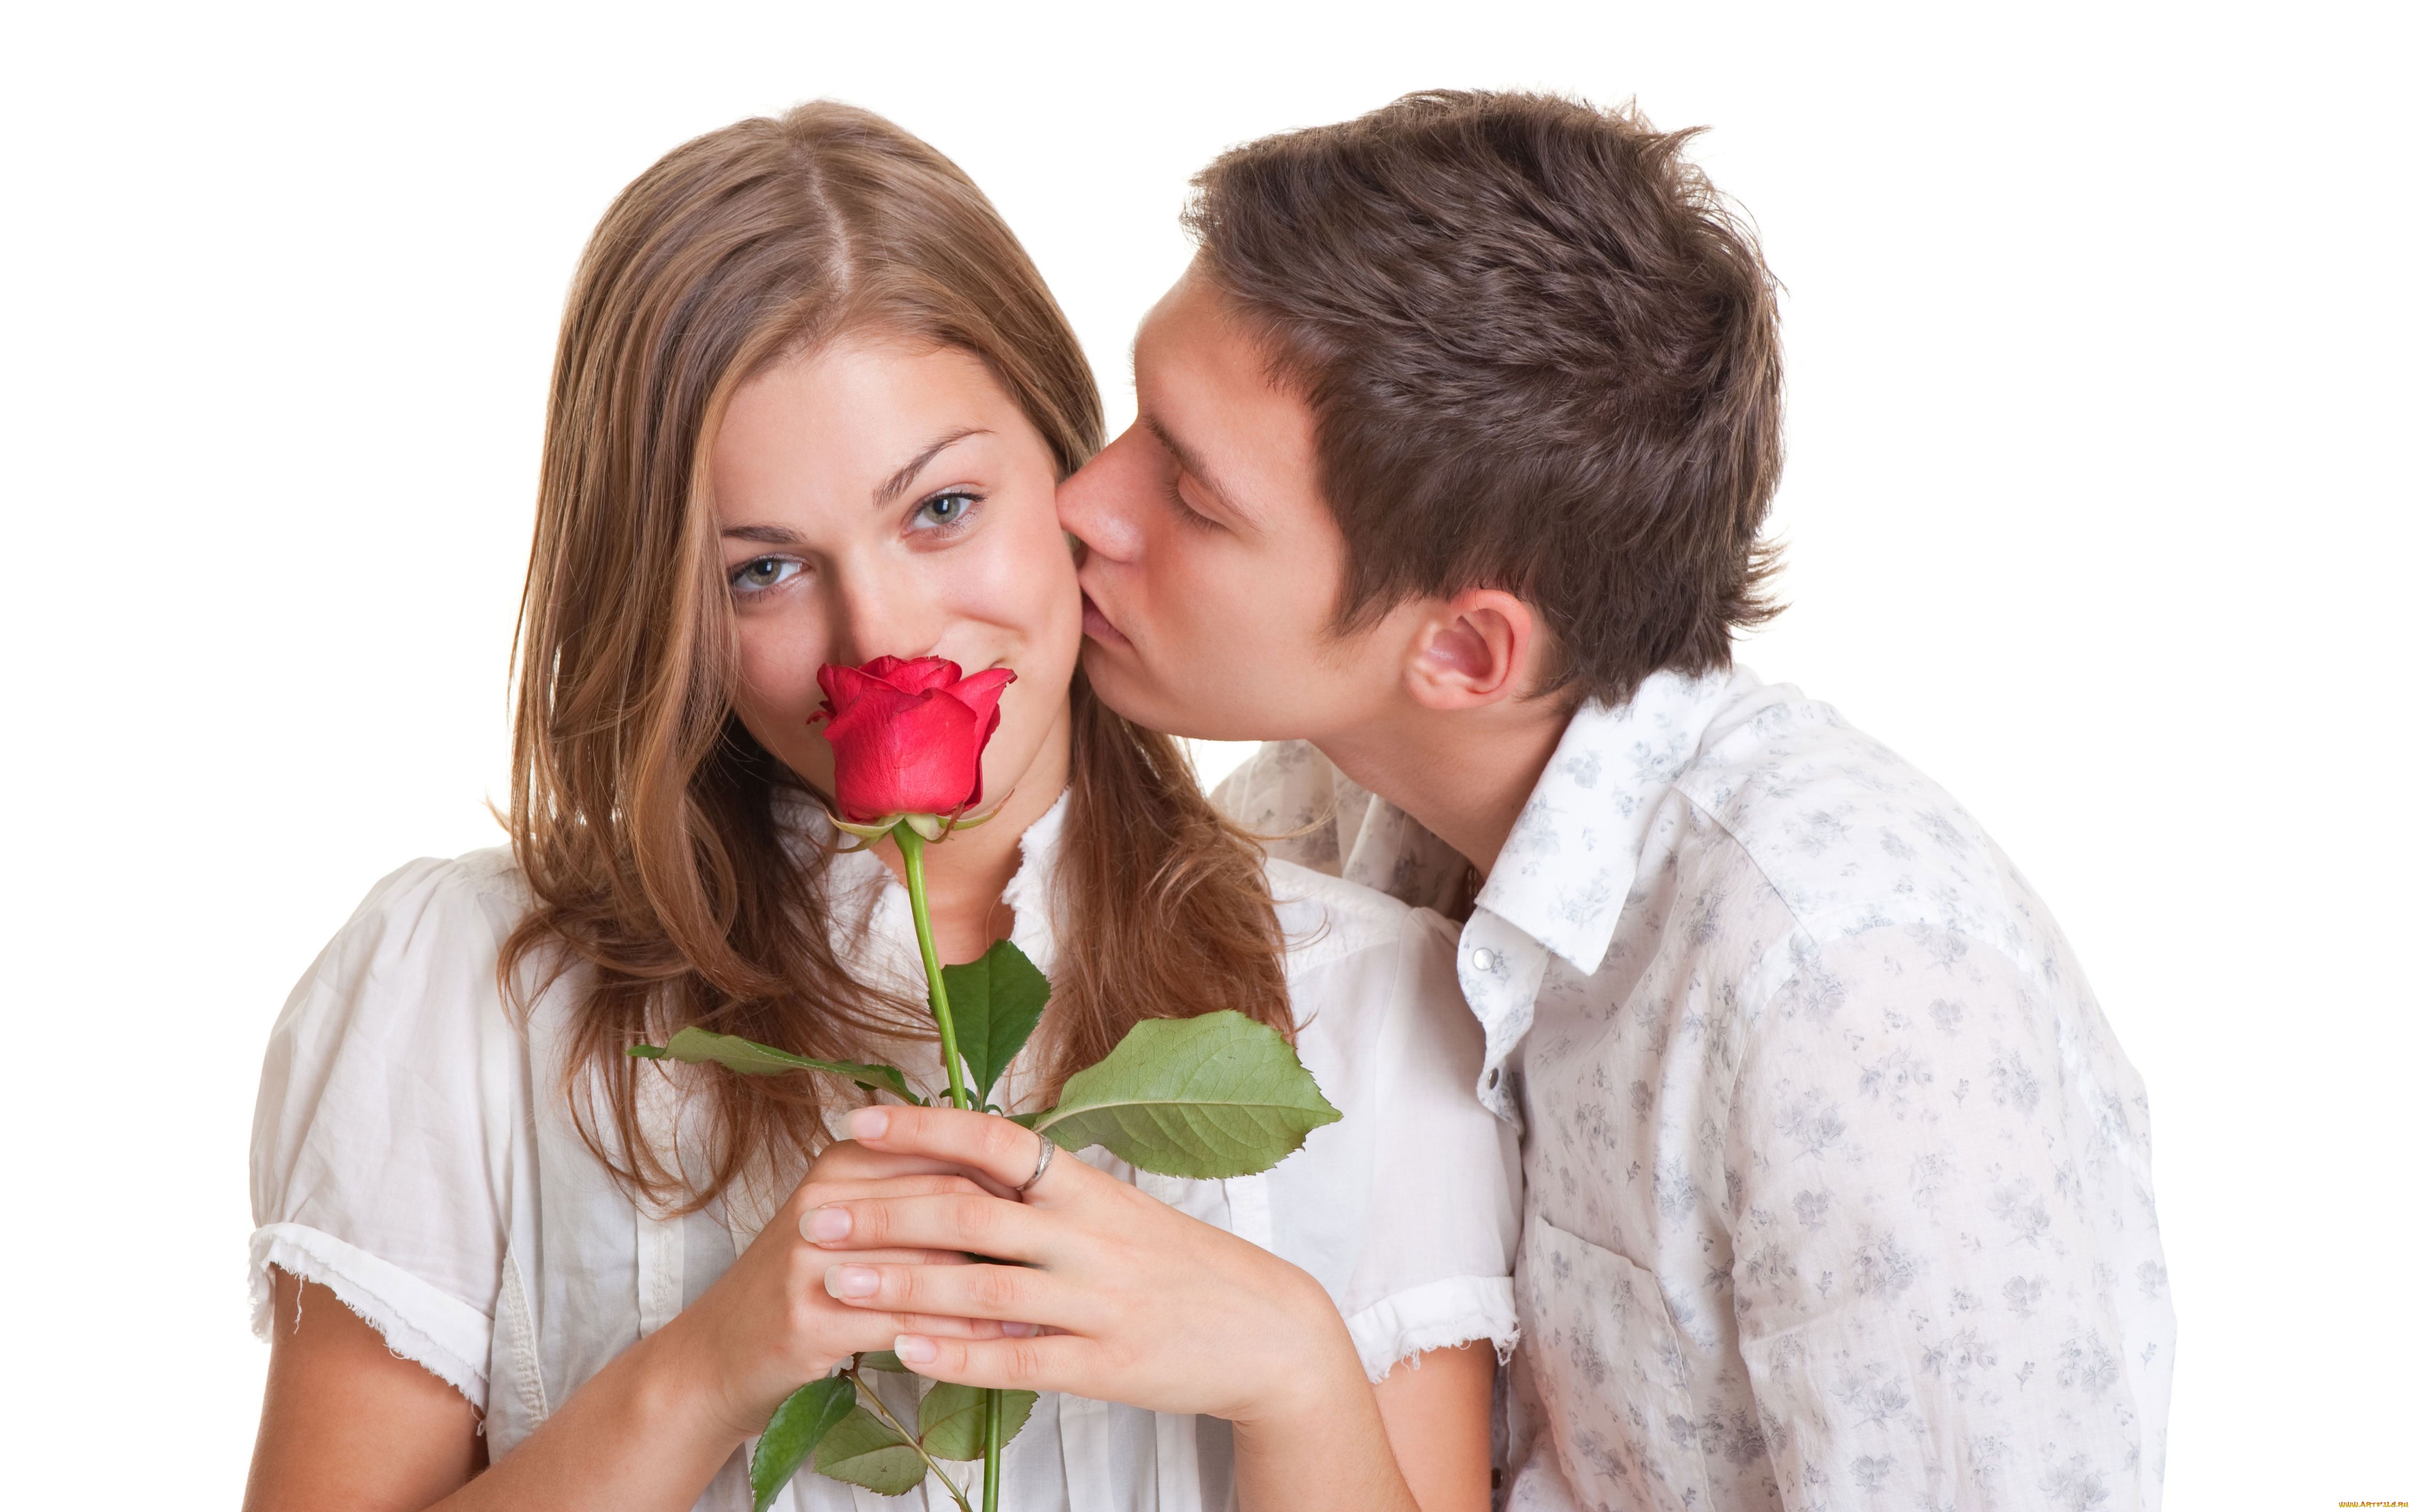 Включи девочки влюбились. Мужчина дарит цветы женщине. Парень дарит девушке цветы. Девушке дарят цветы. Влюбленный мужчина.